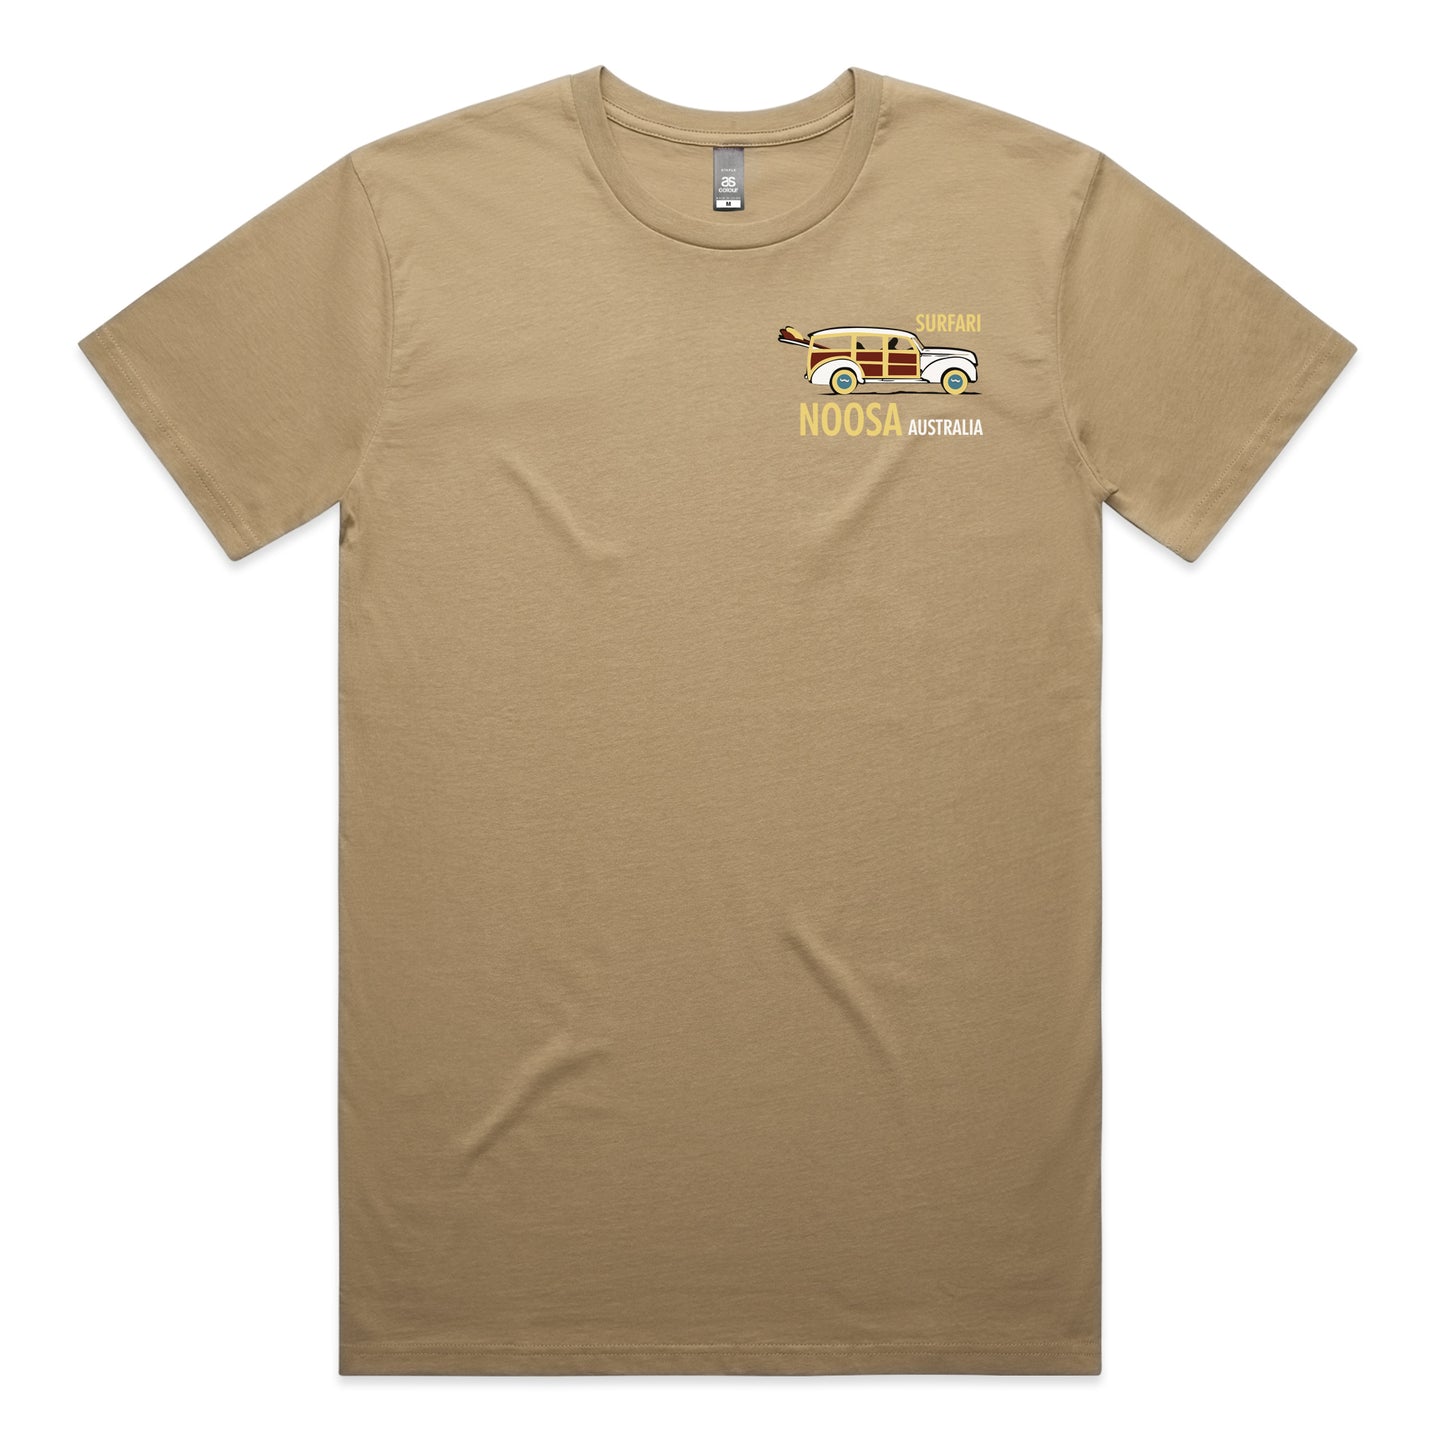 Noosa Surfari T-shirt - Sand